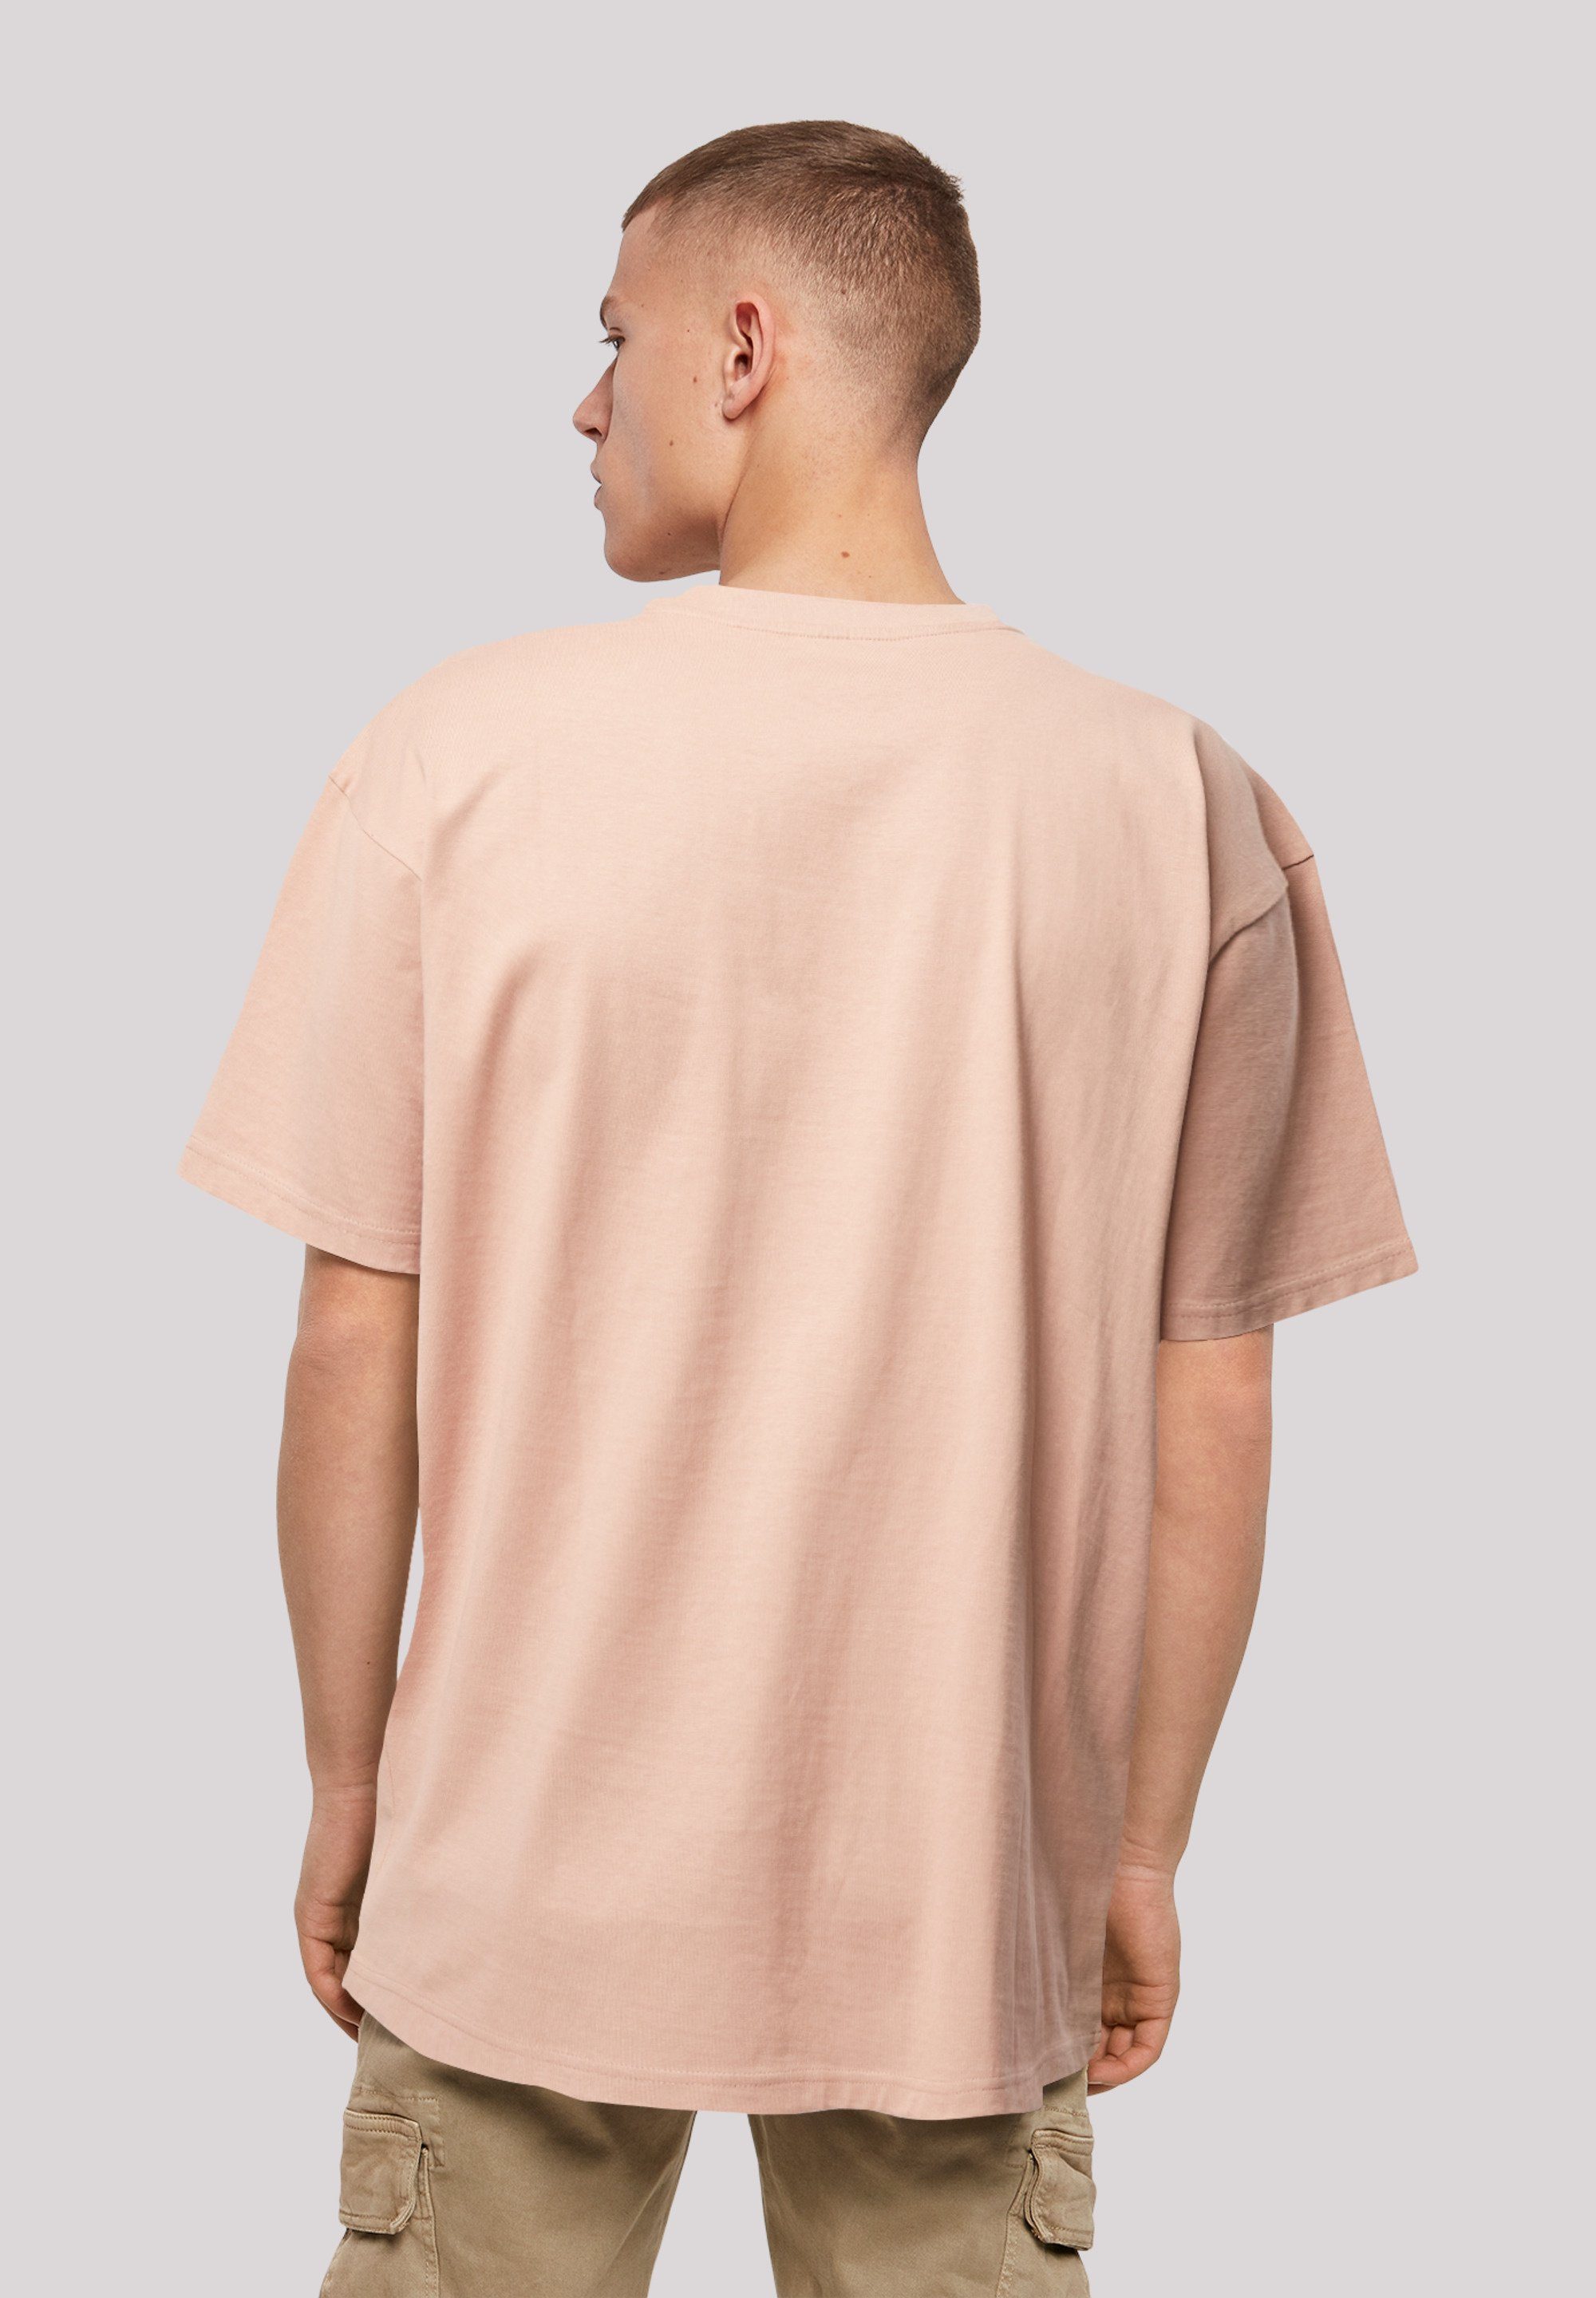 Darts Dartscheibe Print amber T-Shirt Board F4NT4STIC